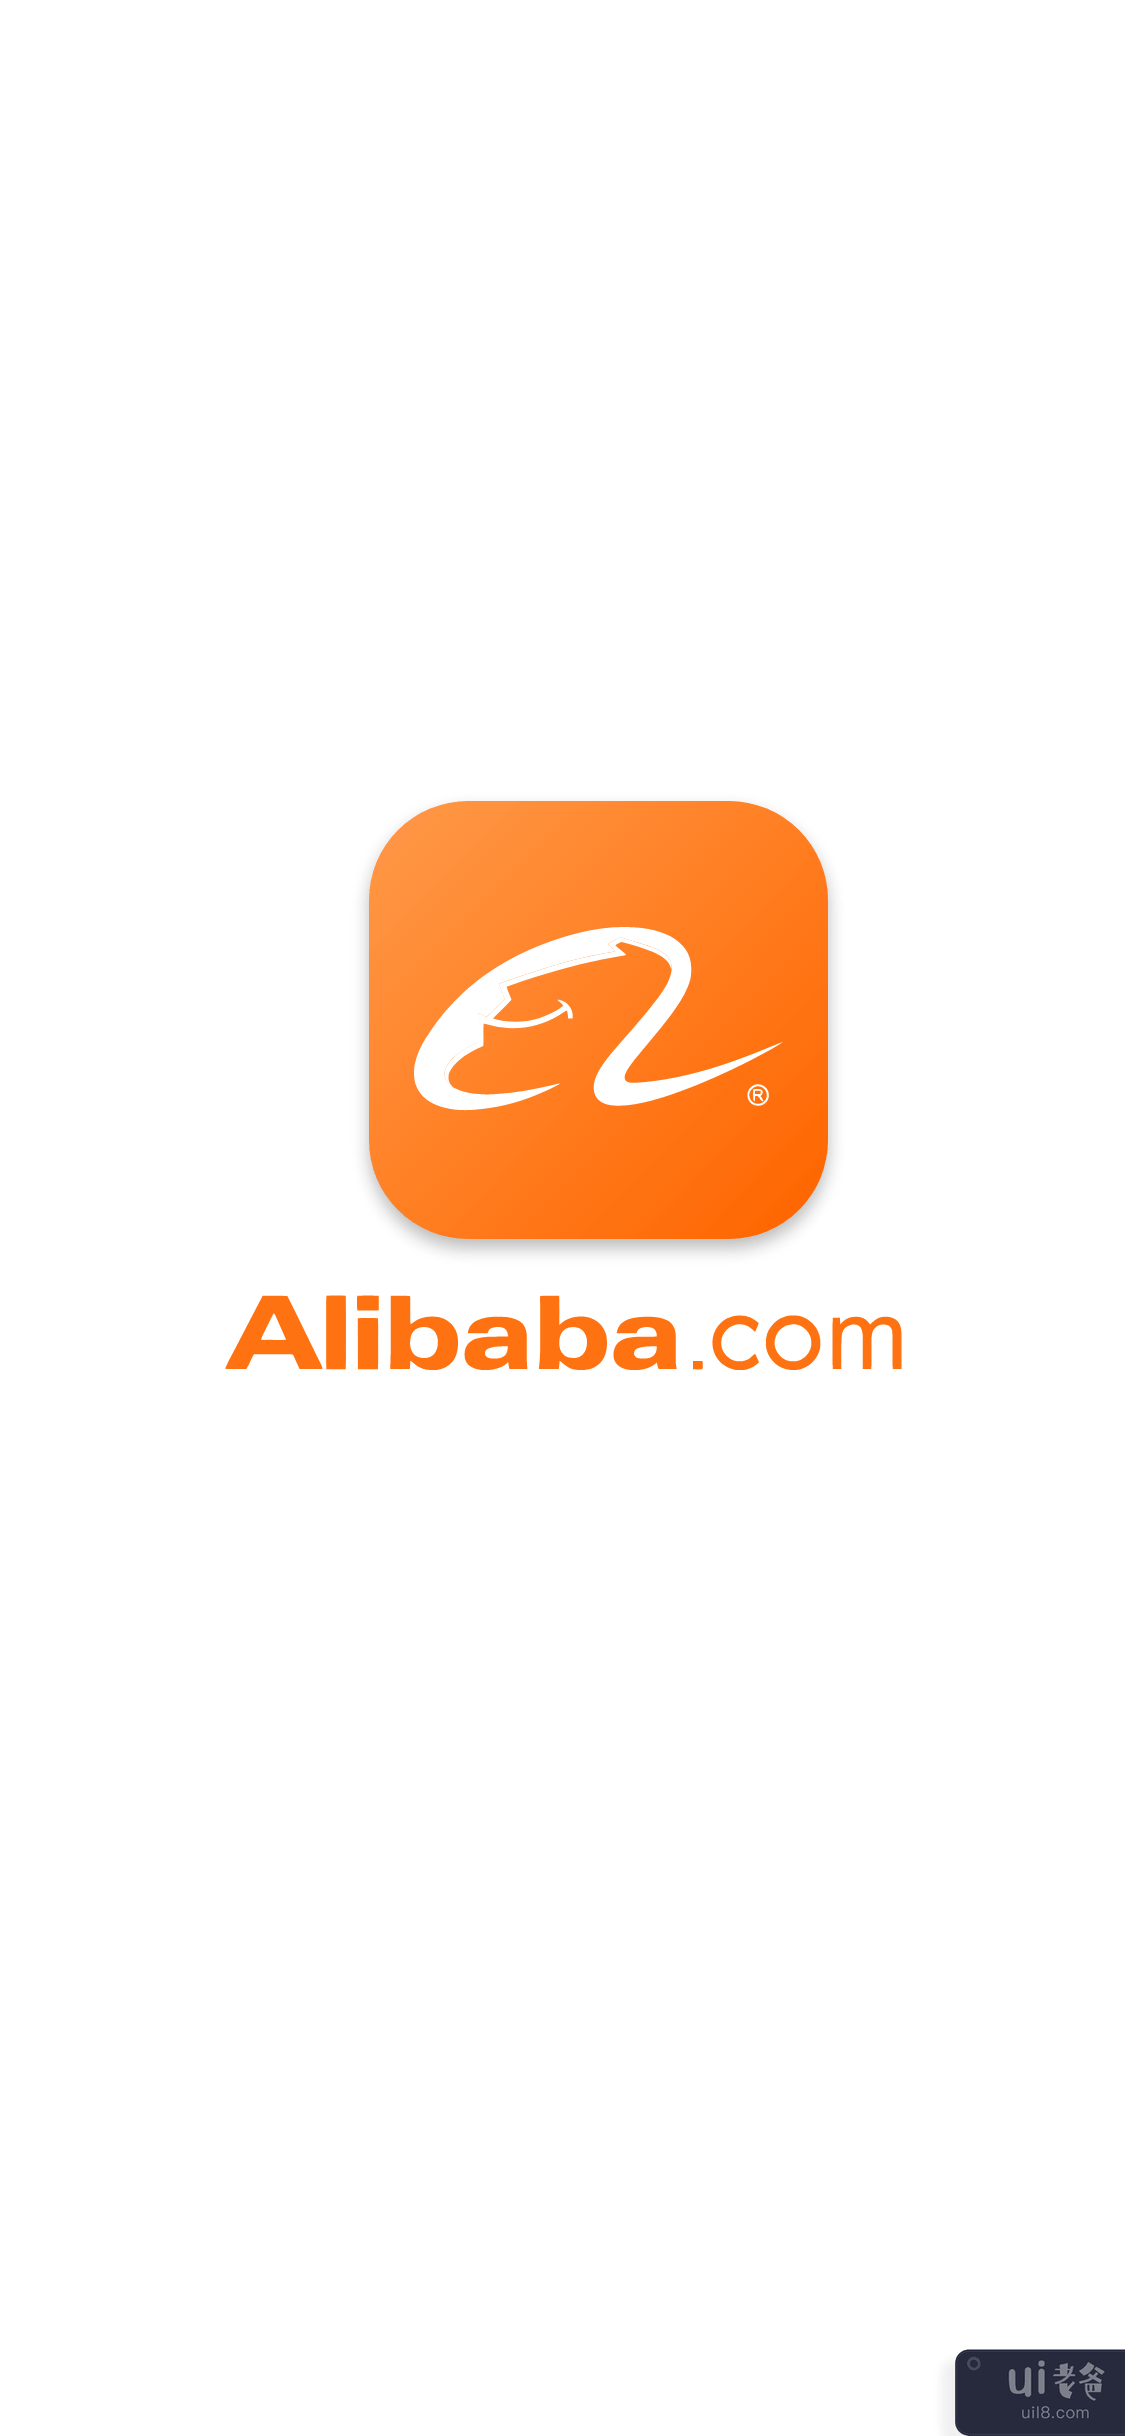 电子商务应用程序设计 - 阿里巴巴 - 网上购物商店(E-commerce App Design - Alibaba - Online Shopping Store)插图3